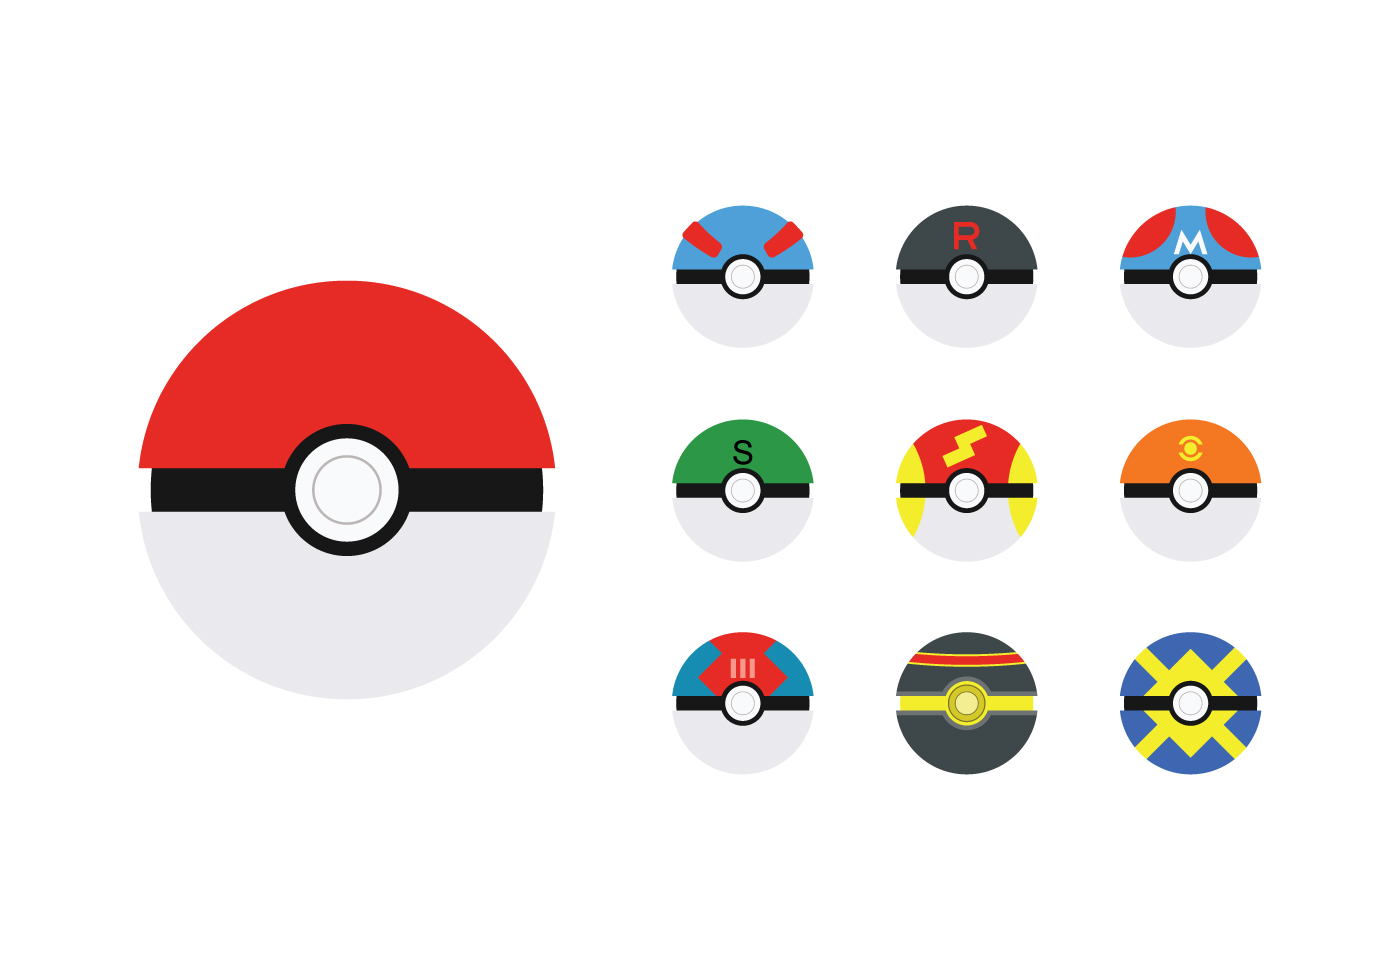 Browse 20 incredible Pokemon Pokeball vectors, icons, clipart graphics, and...